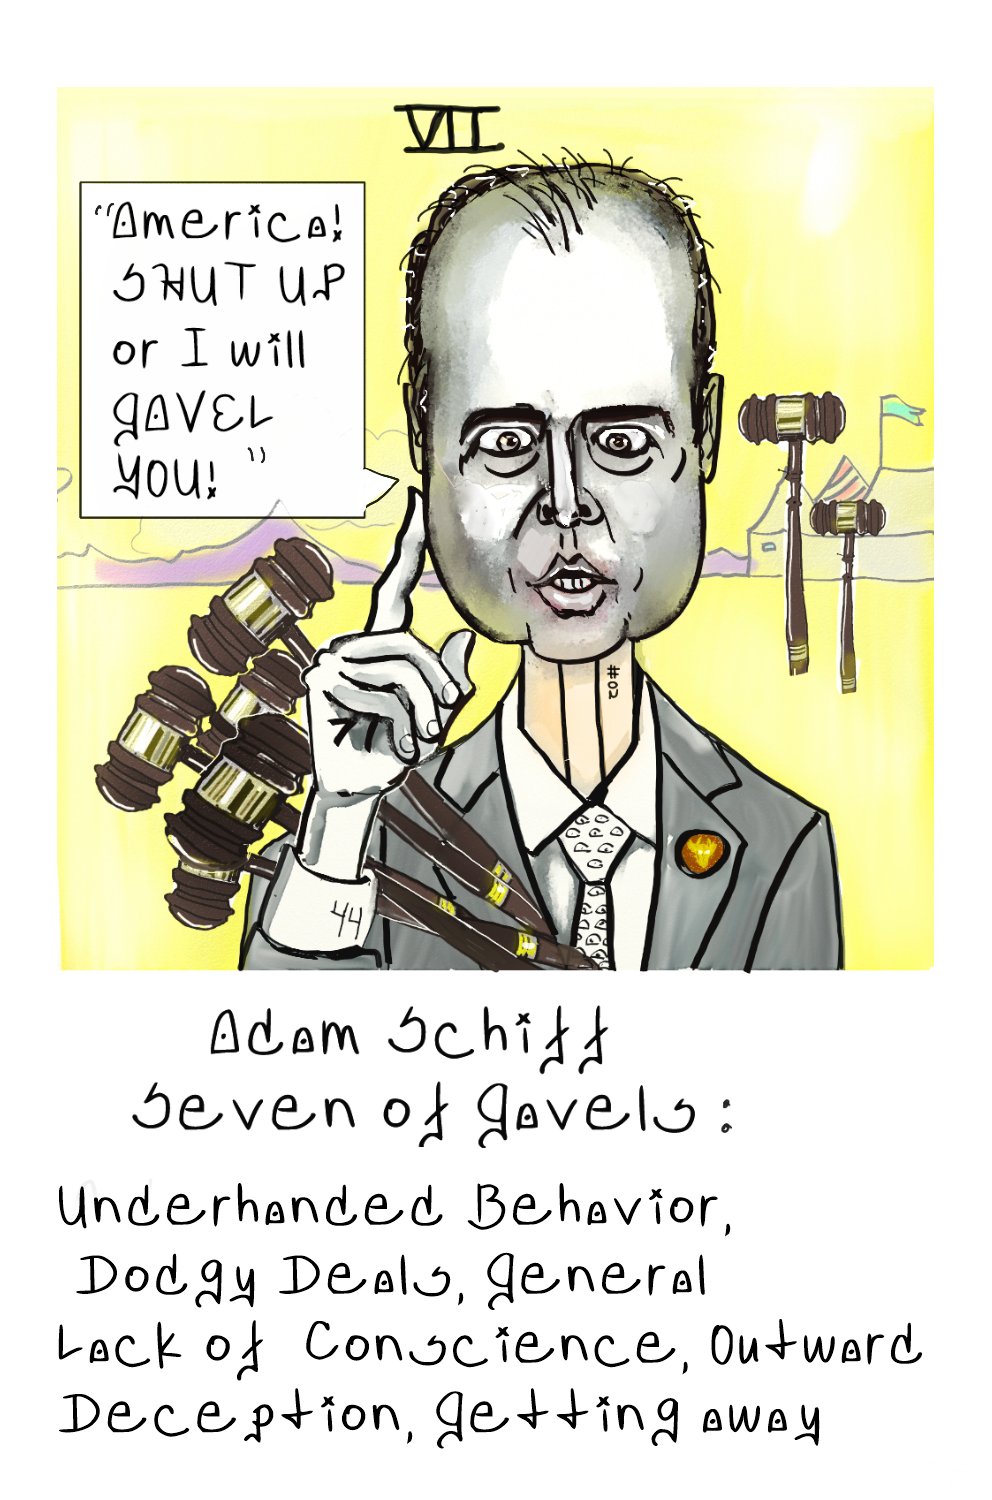 Roger Stone trial Adam Schiff Tarot Card political cartoons for President 🦁Donald Trump post thumbnail image